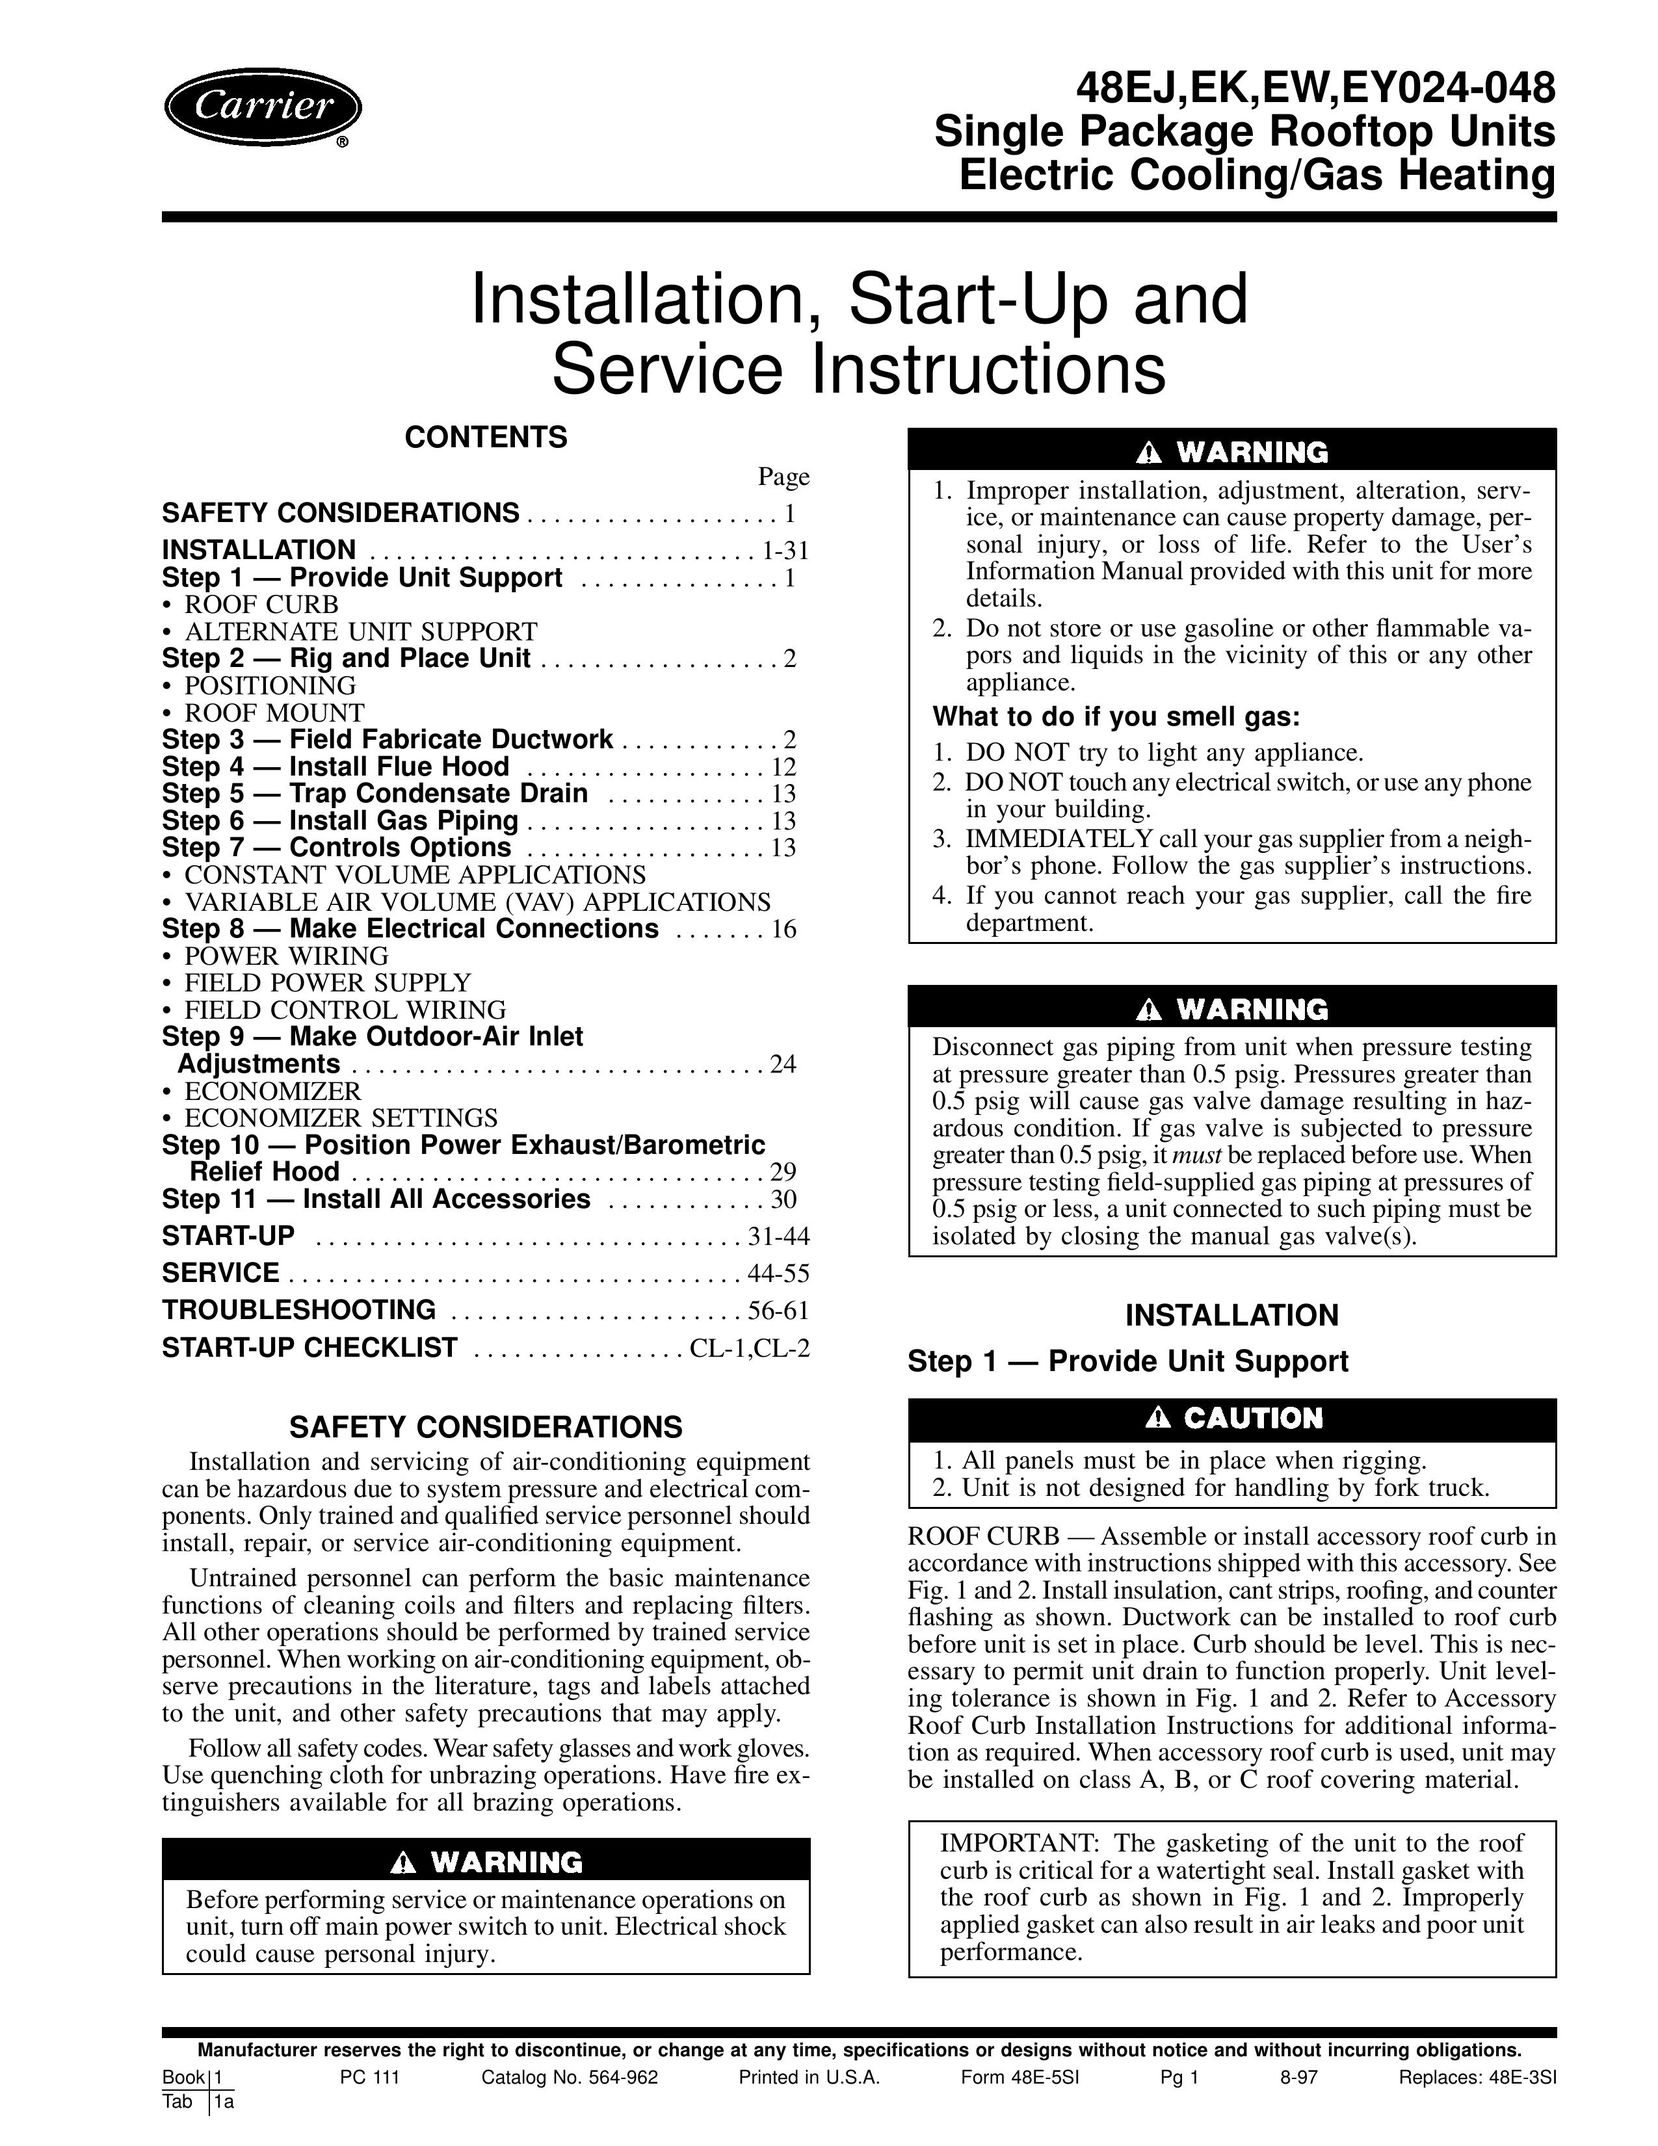 Carrier 48EJ Gas Heater User Manual